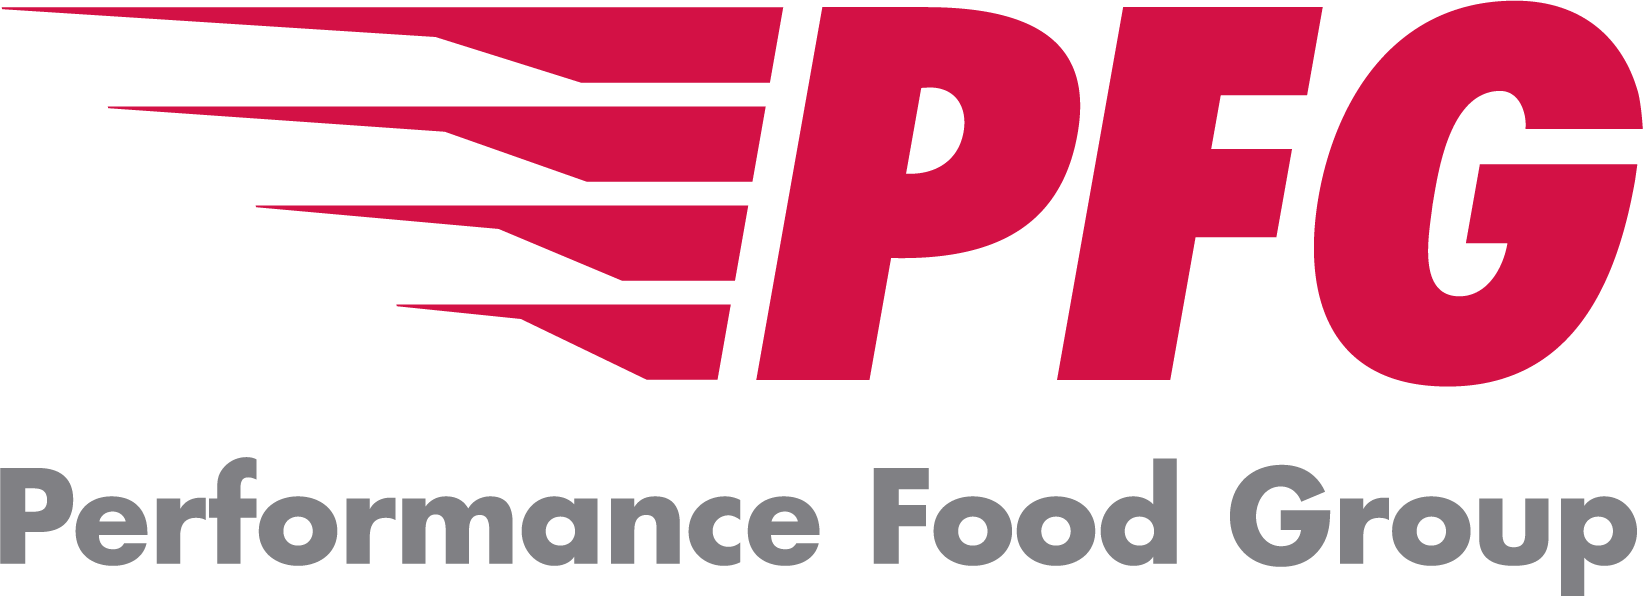 Performance Food Group, Inc. dba Jenny Service/Vistar logo